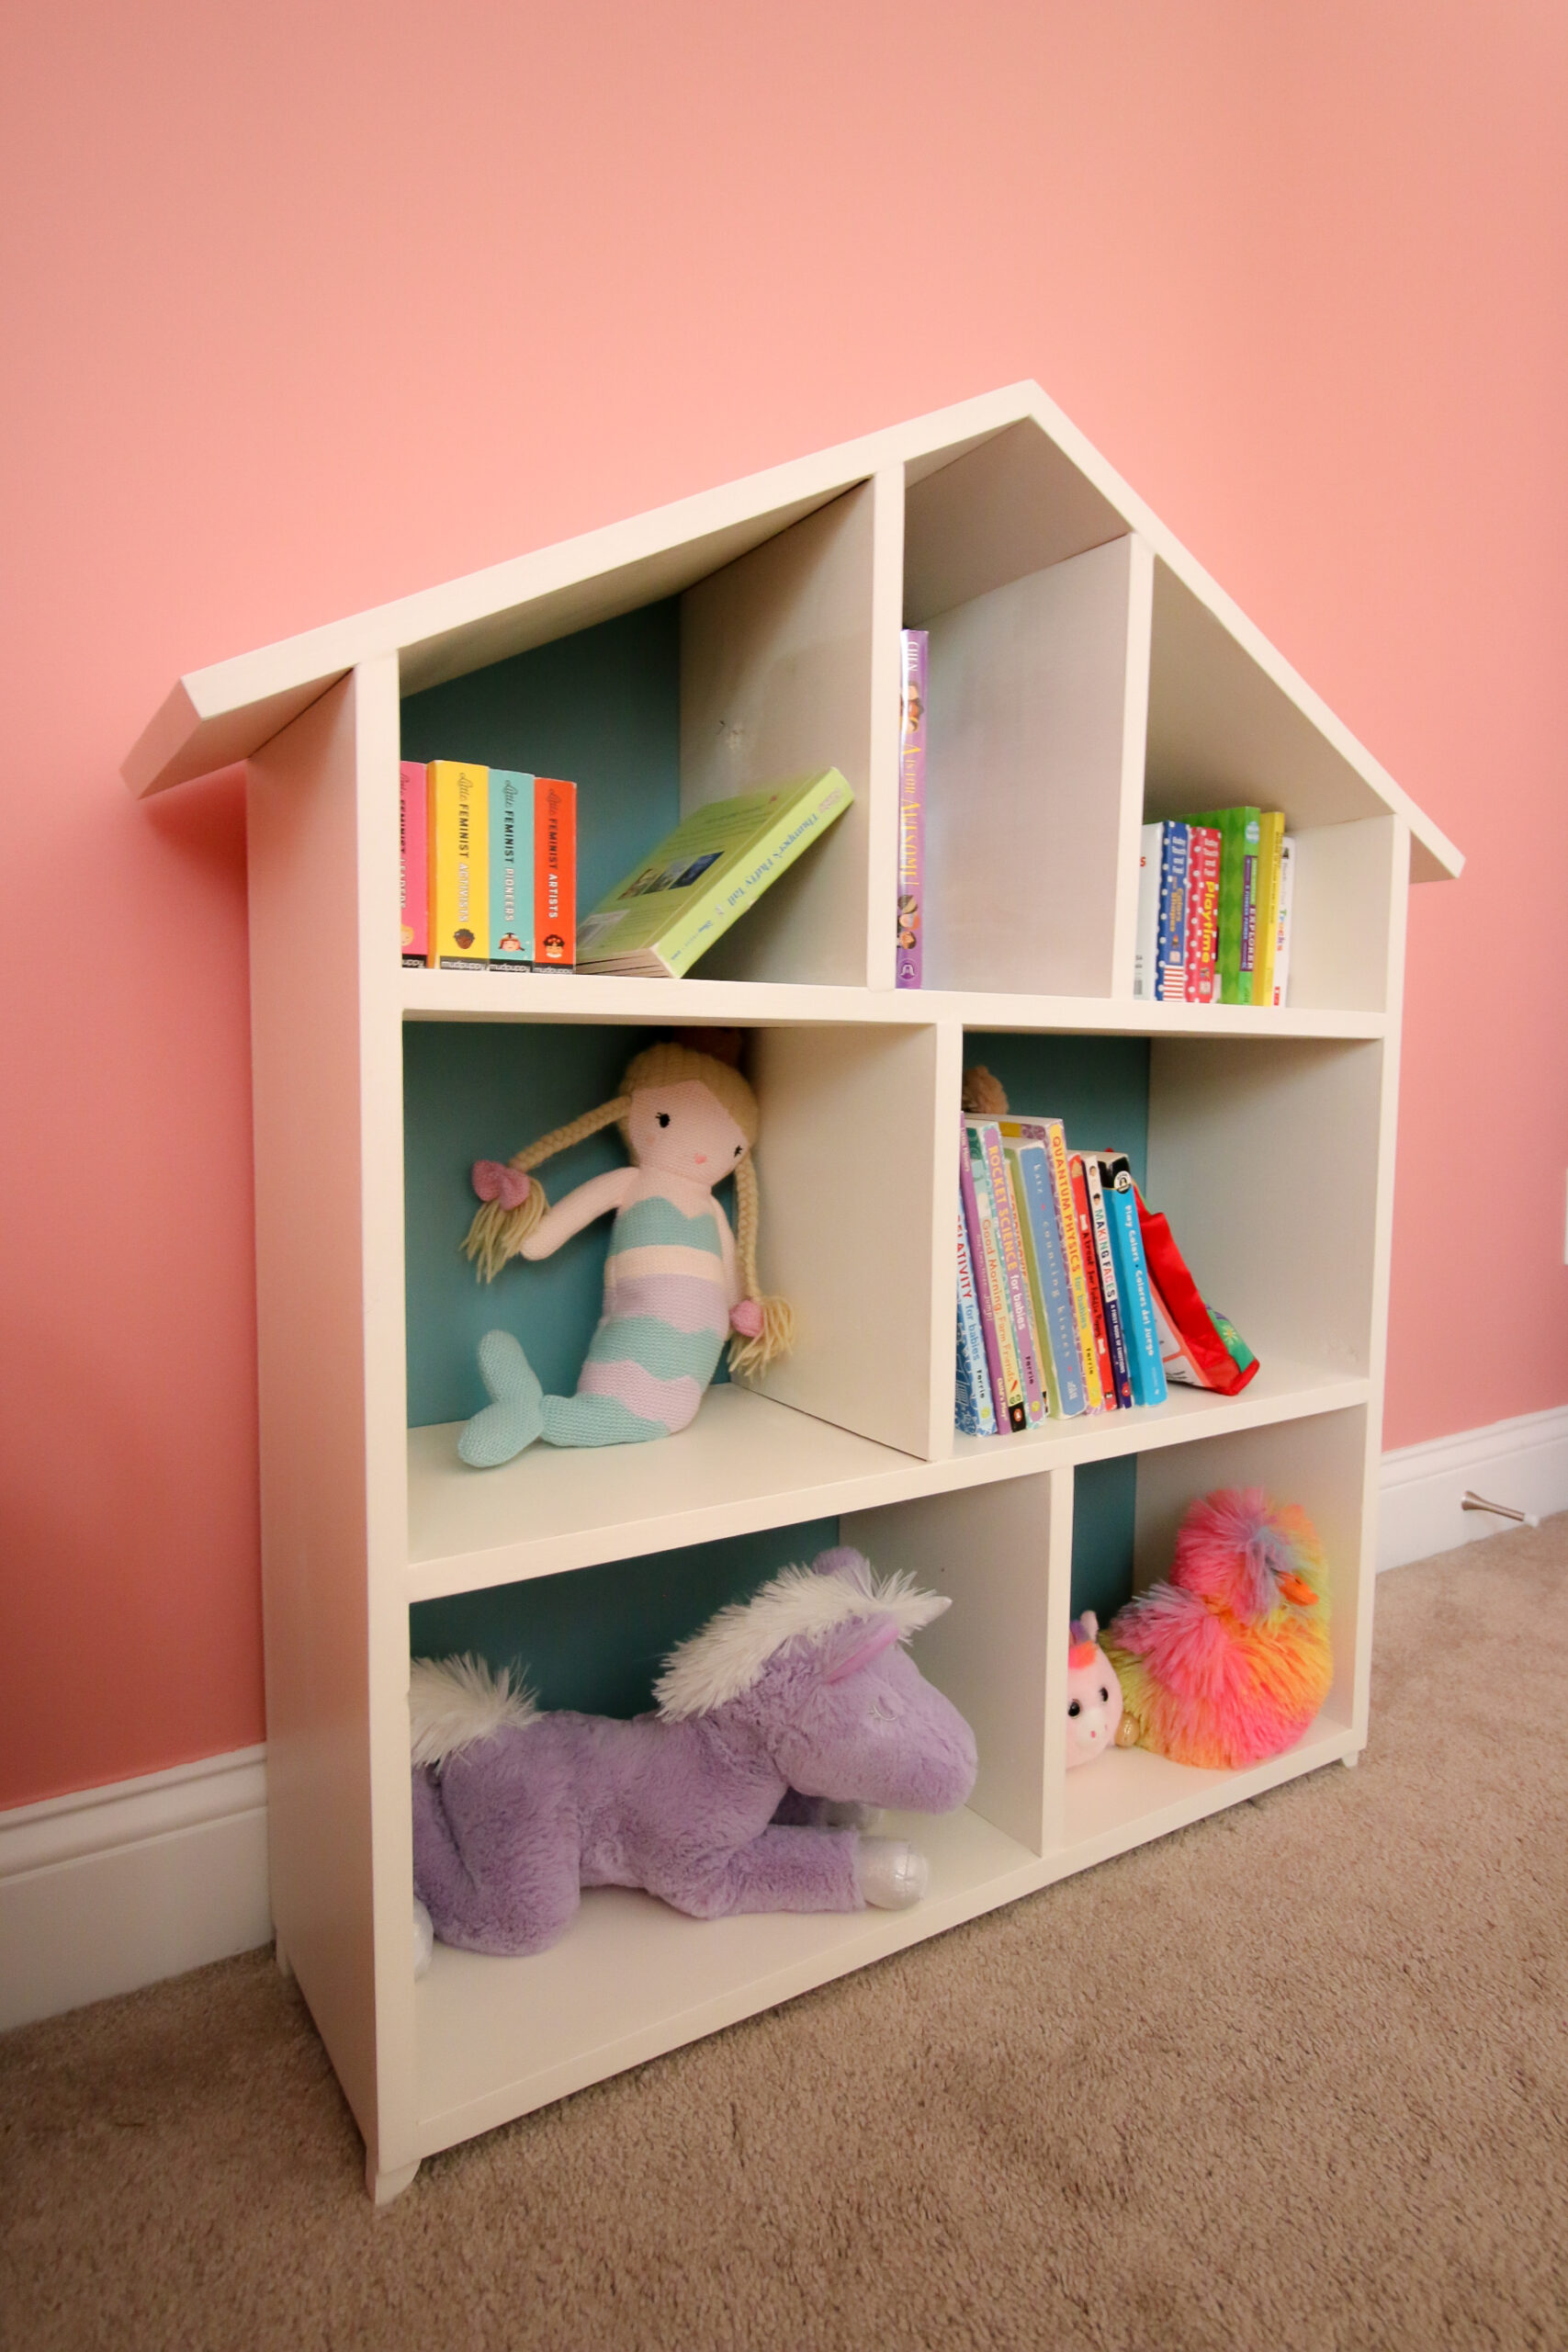 How to build a DIY dollhouse bookshelf